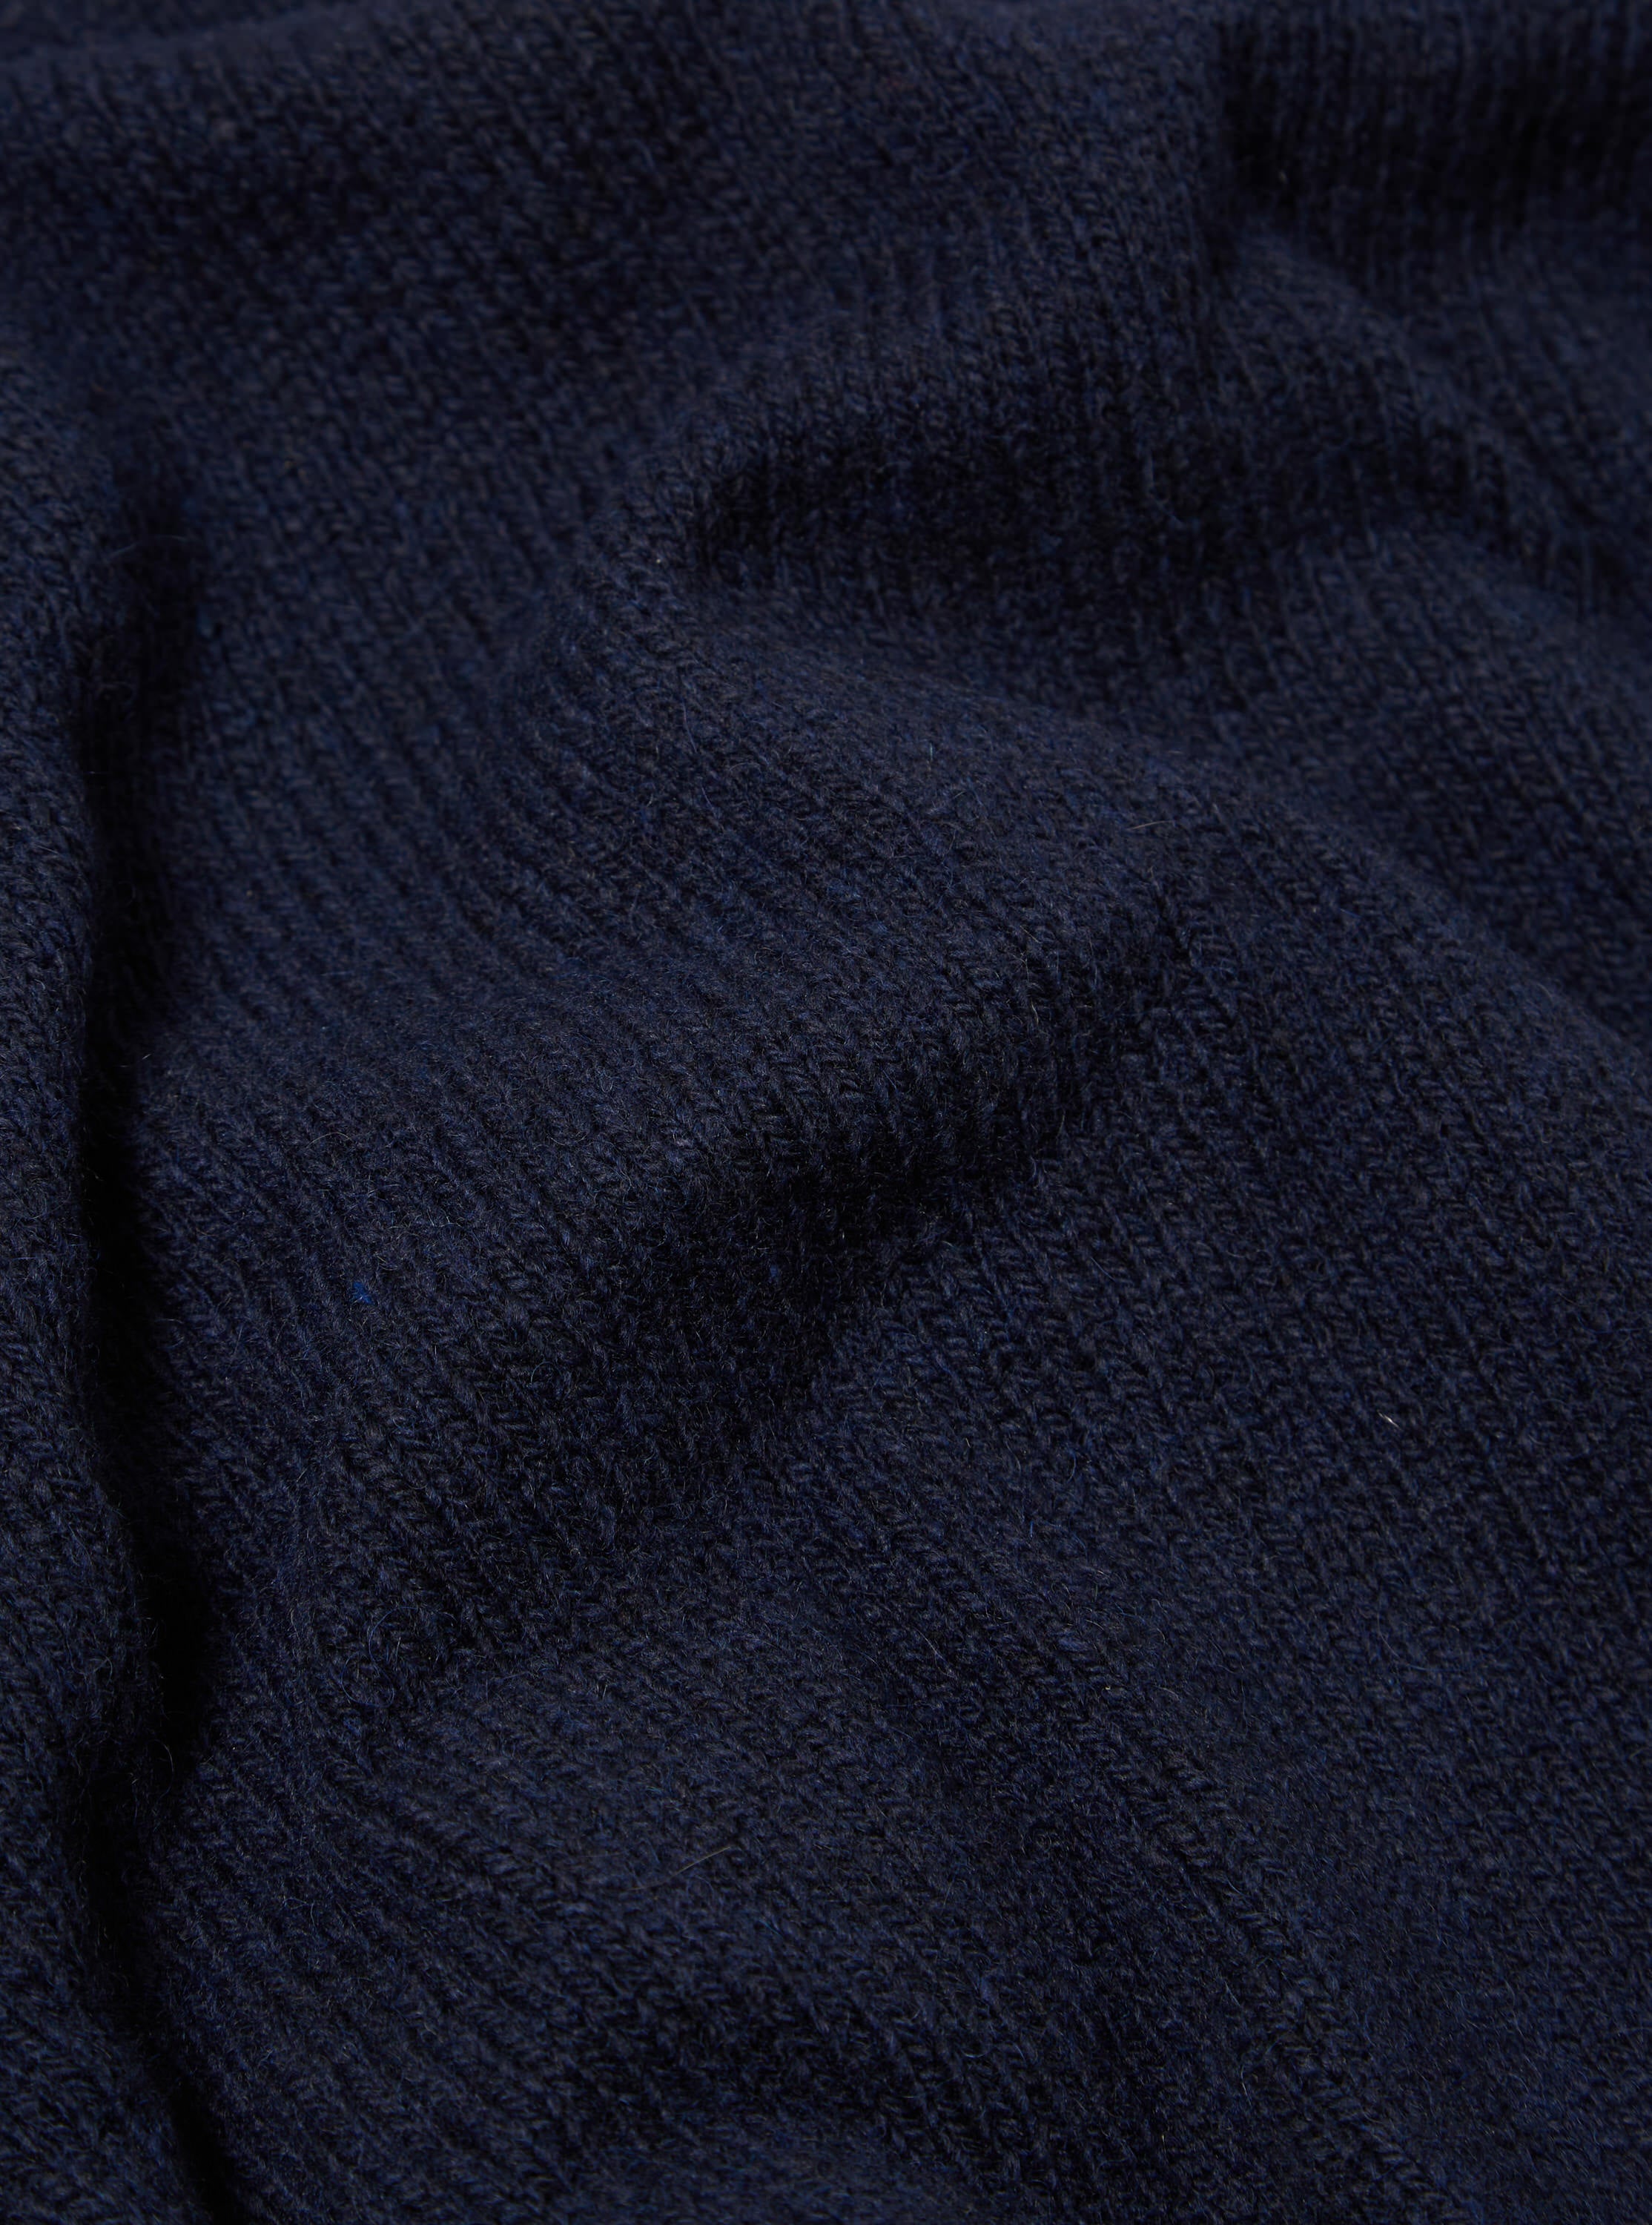 Universal Works Sweater Vest in Navy Eco Wool